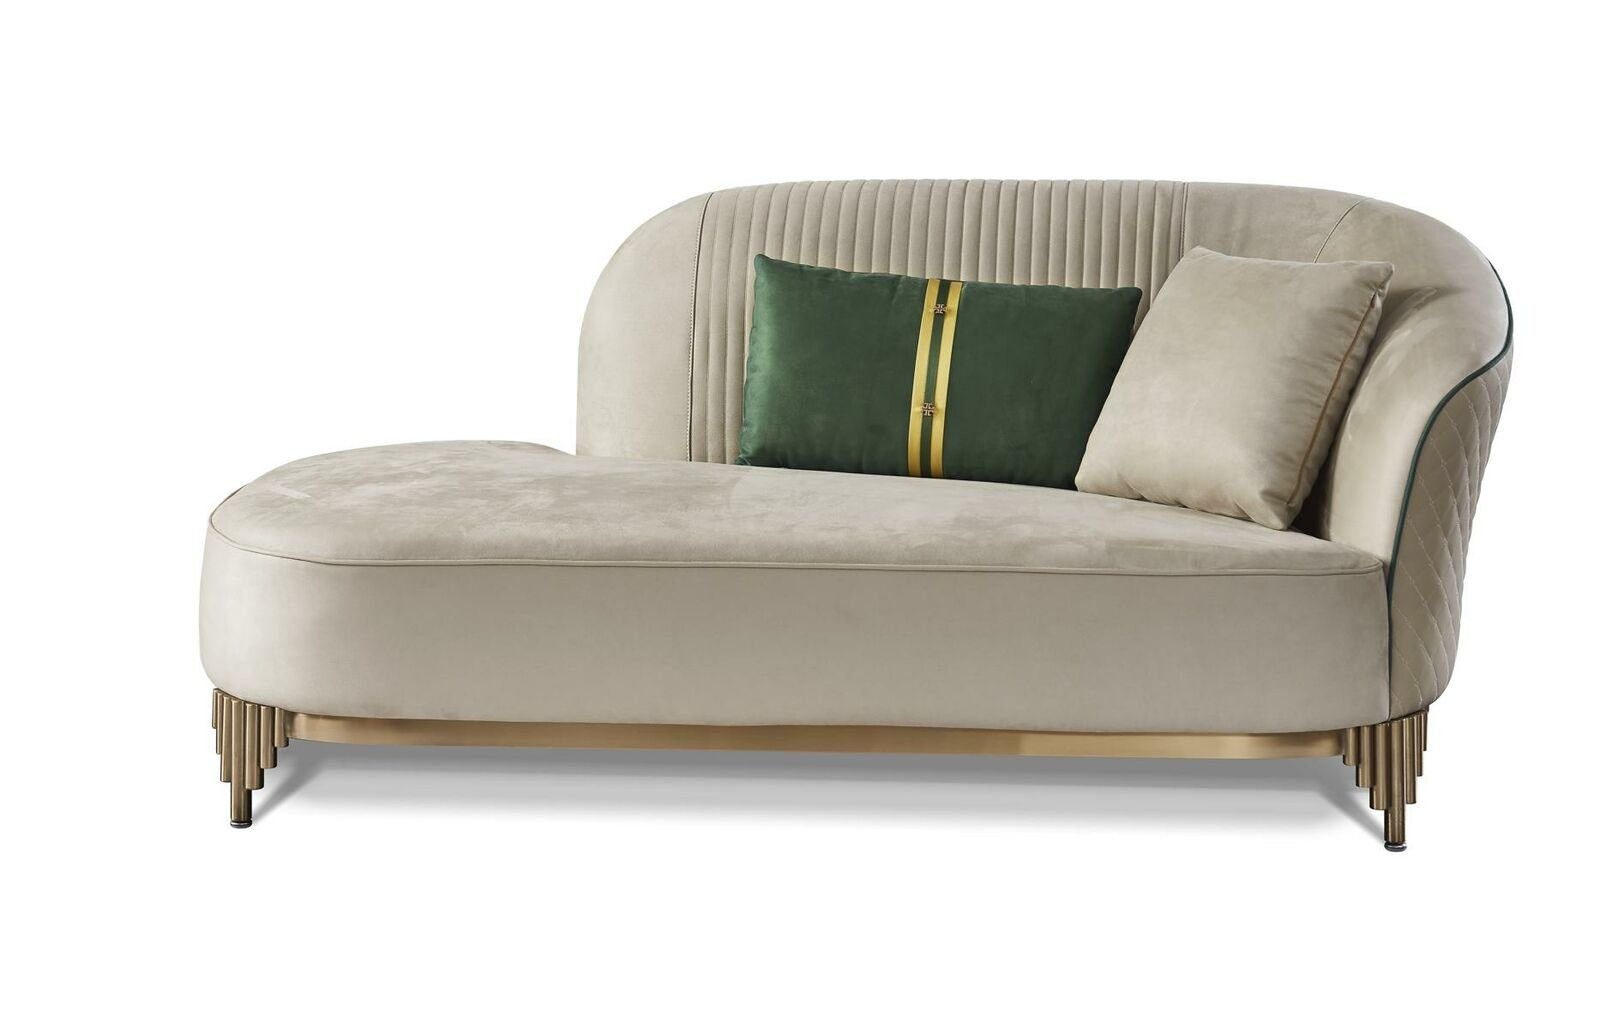 JVmoebel Chaiselongue Chaiselongues Sofa Couch Liege Ottomane Luxus Liegen Designer, Made in Europe